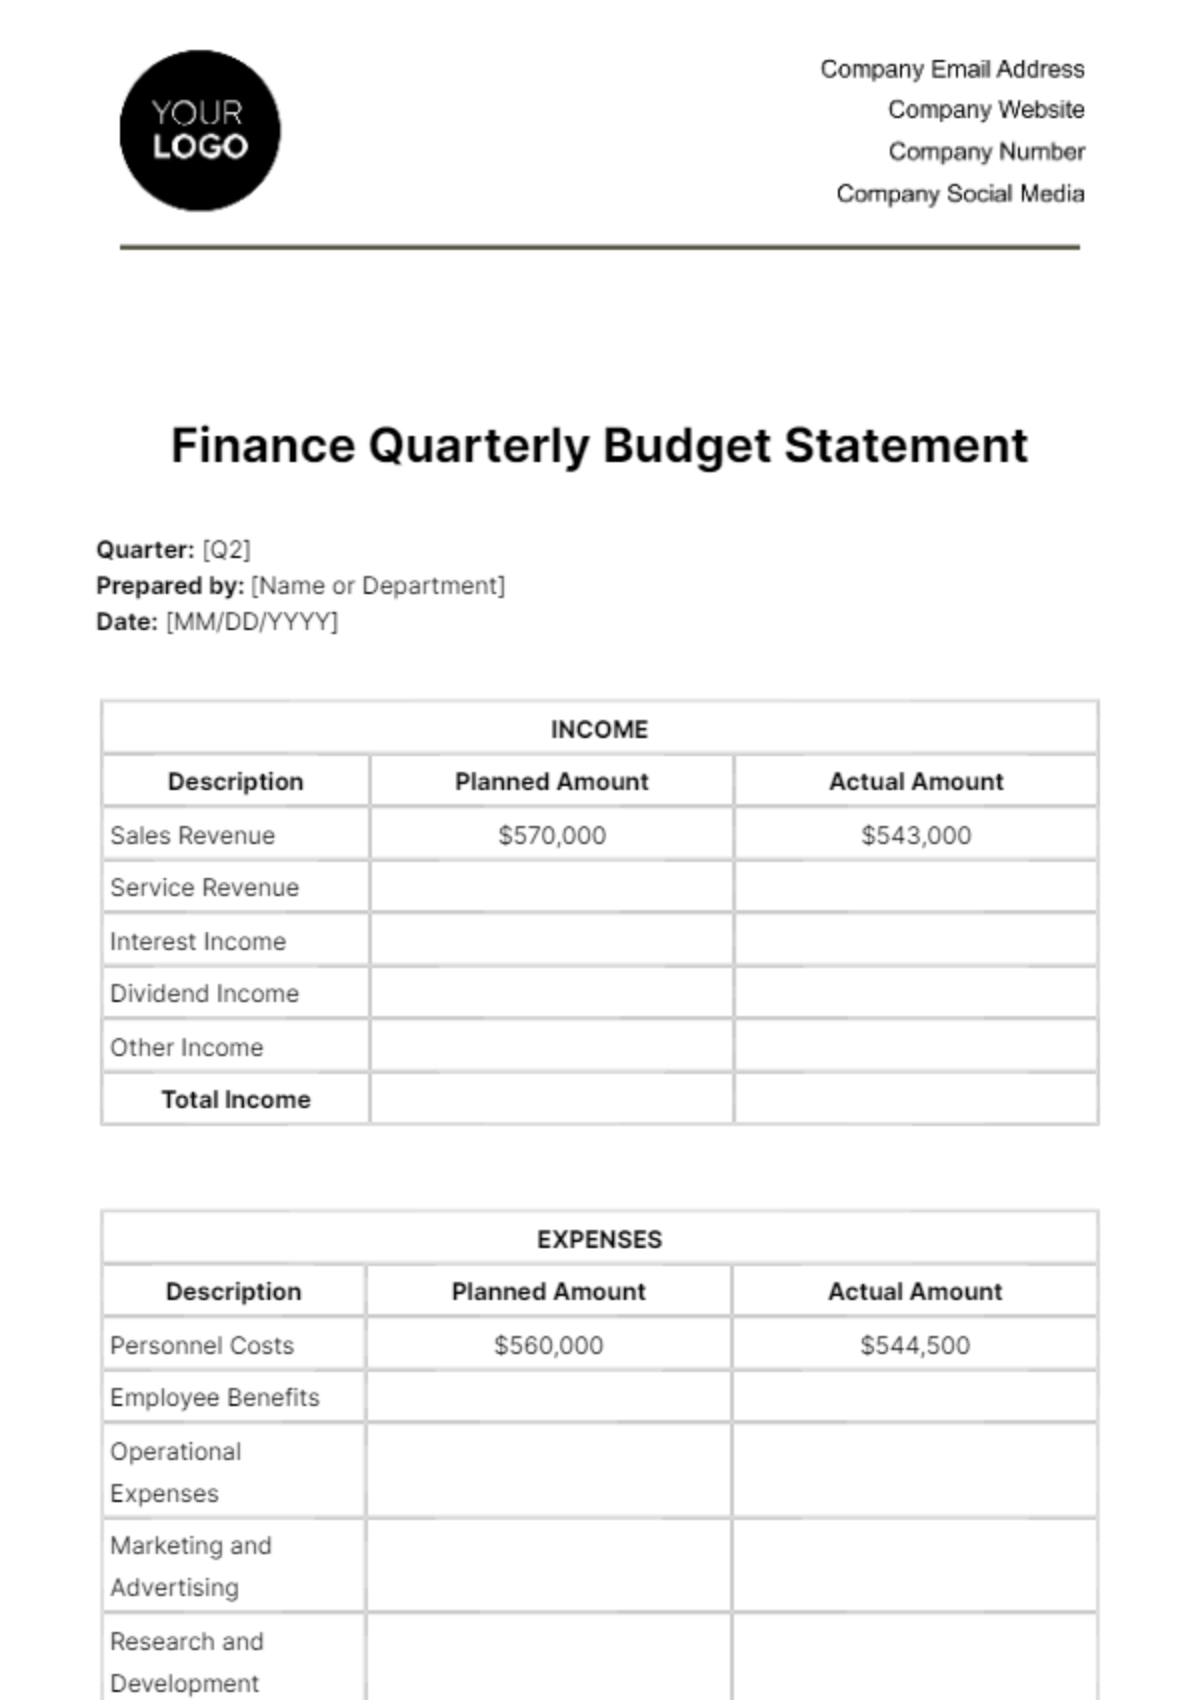 Finance Quarterly Budget Statement Template